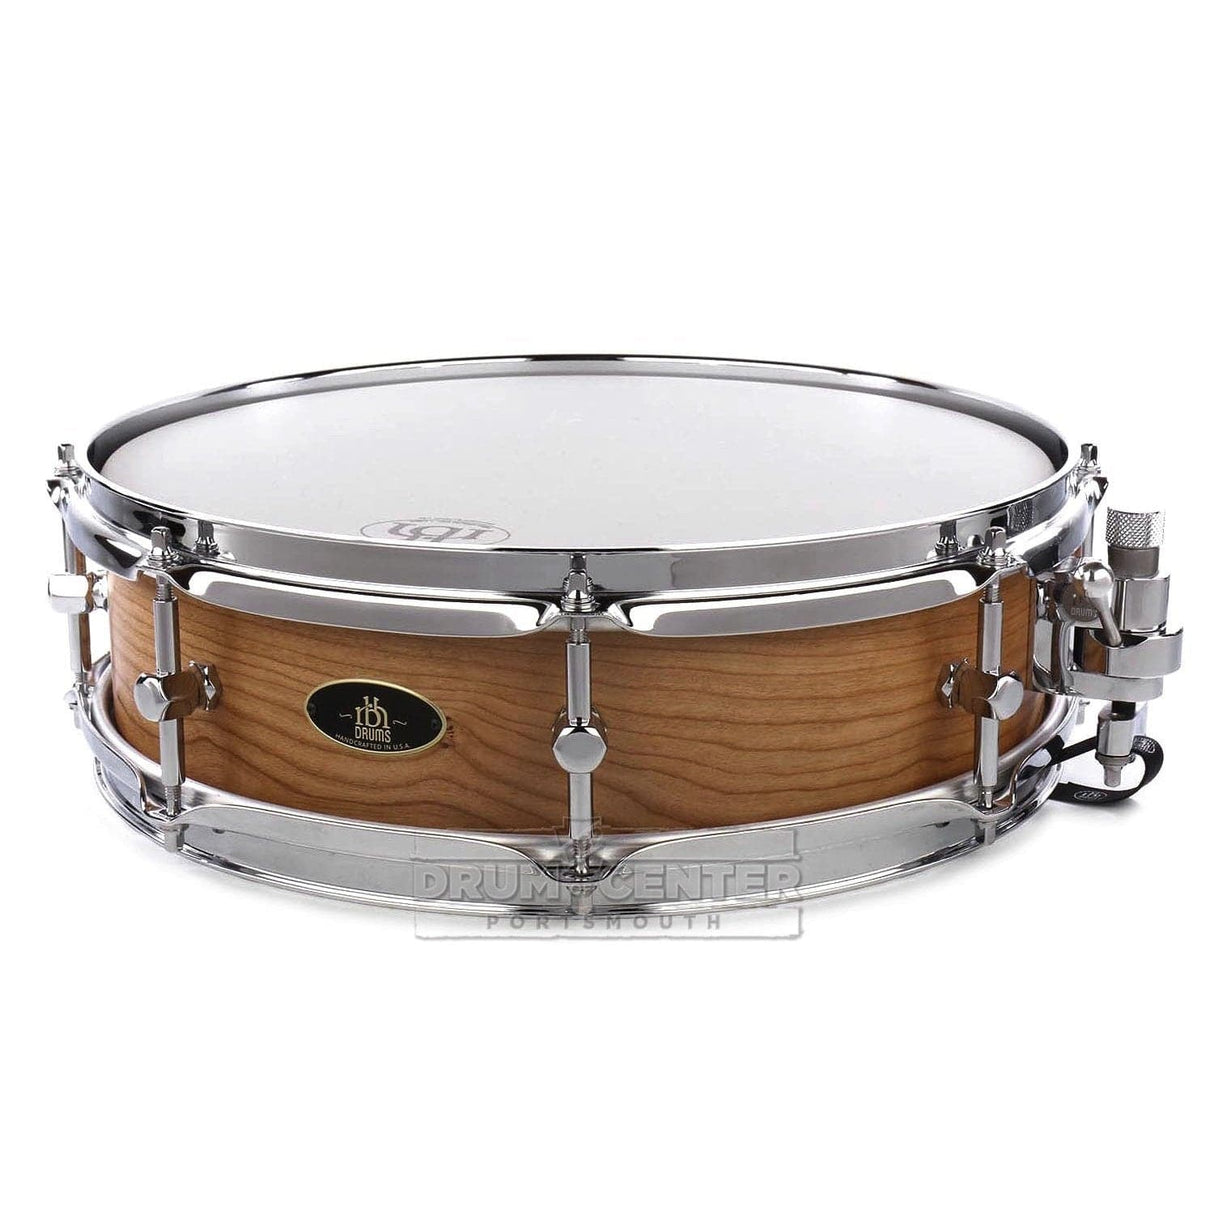 RBH Prestige Solid Cherry Snare Drum 14x4 w/Walnut Rings + FREE Case